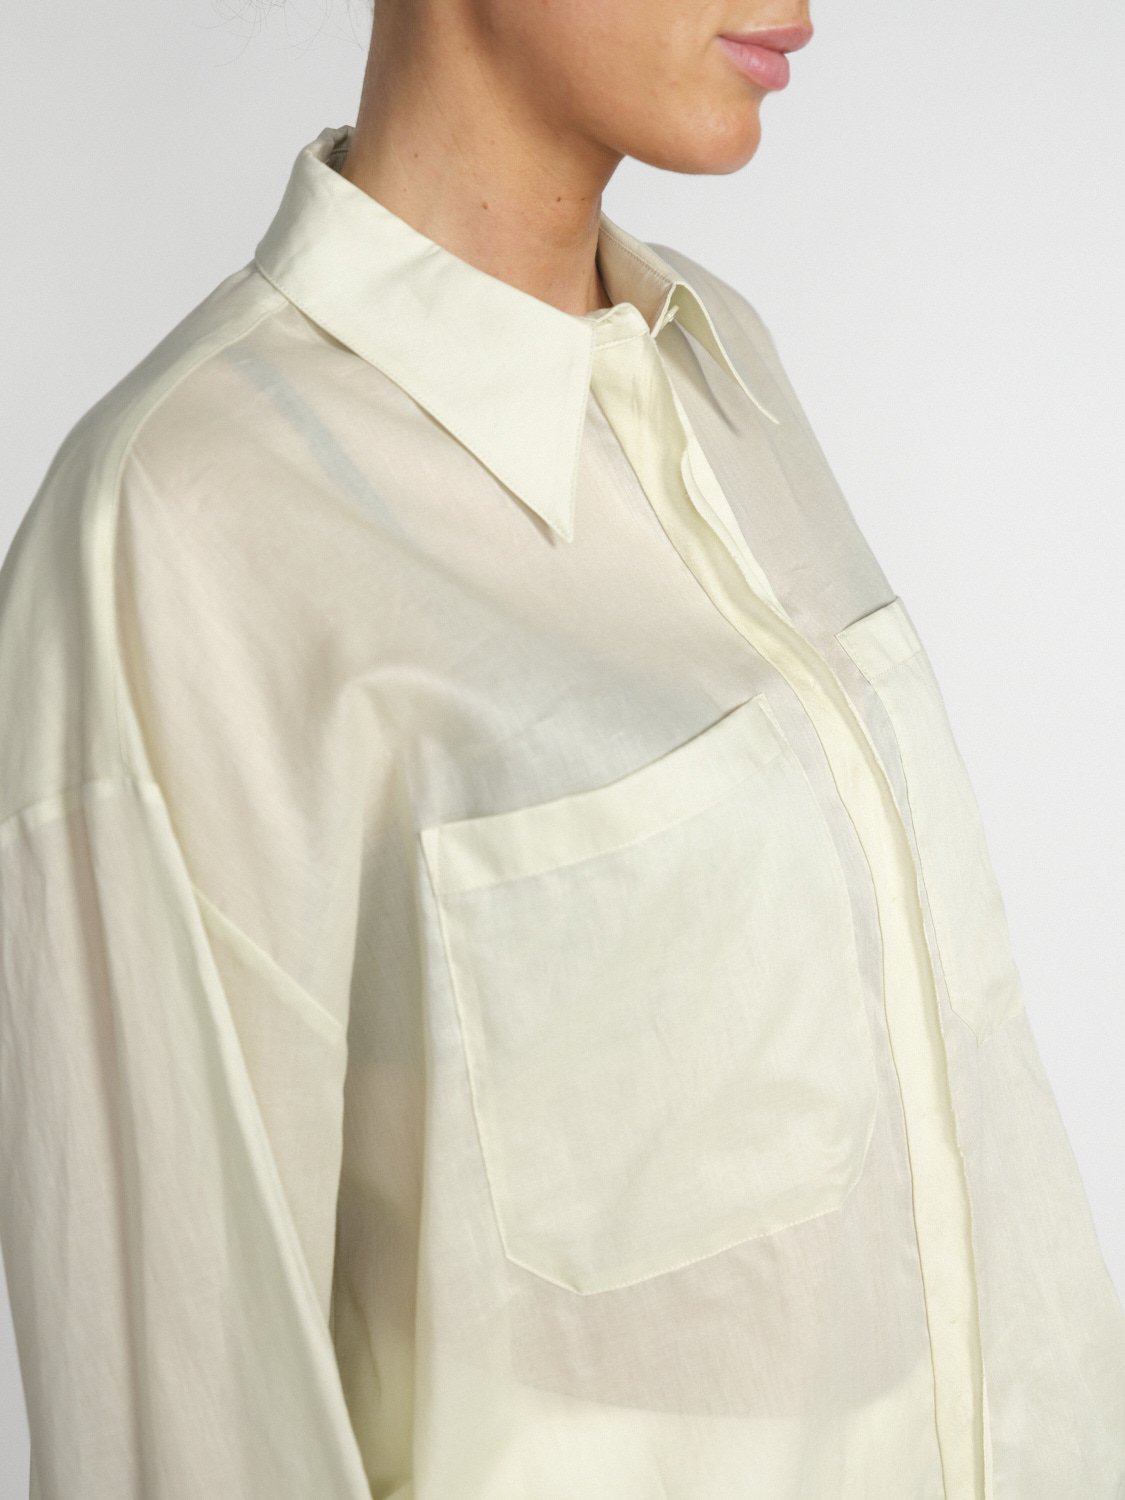 Dorothee Schumacher Fantasy - Slightly transparent blouse made of cotton  hellgrün XS